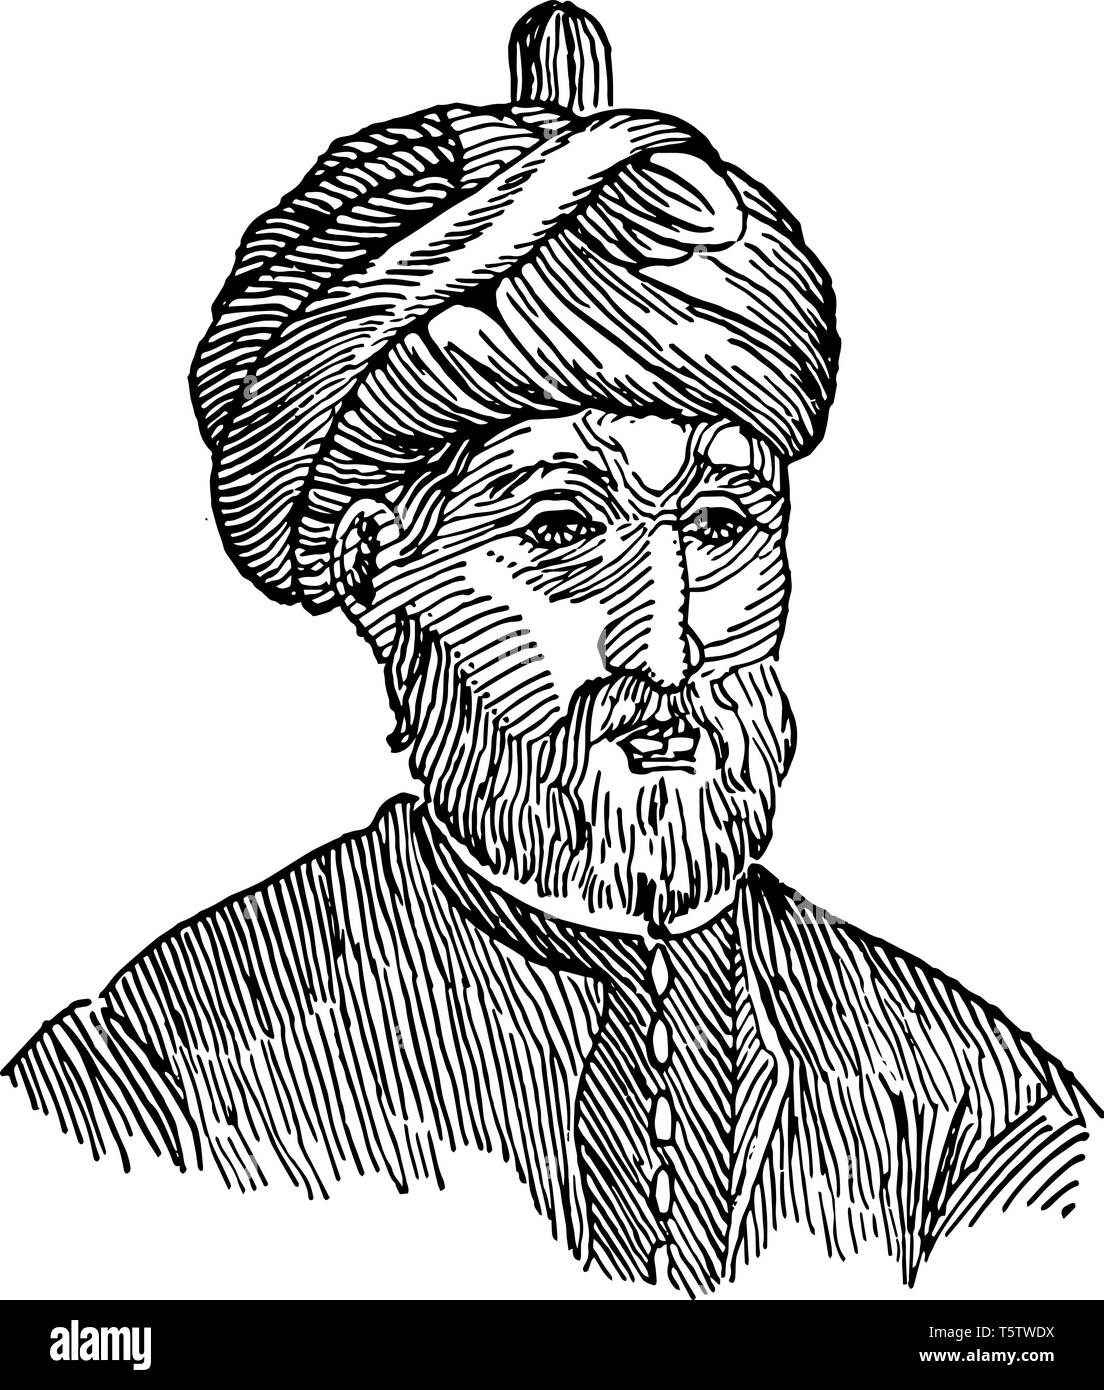 muhammad the prophet drawing